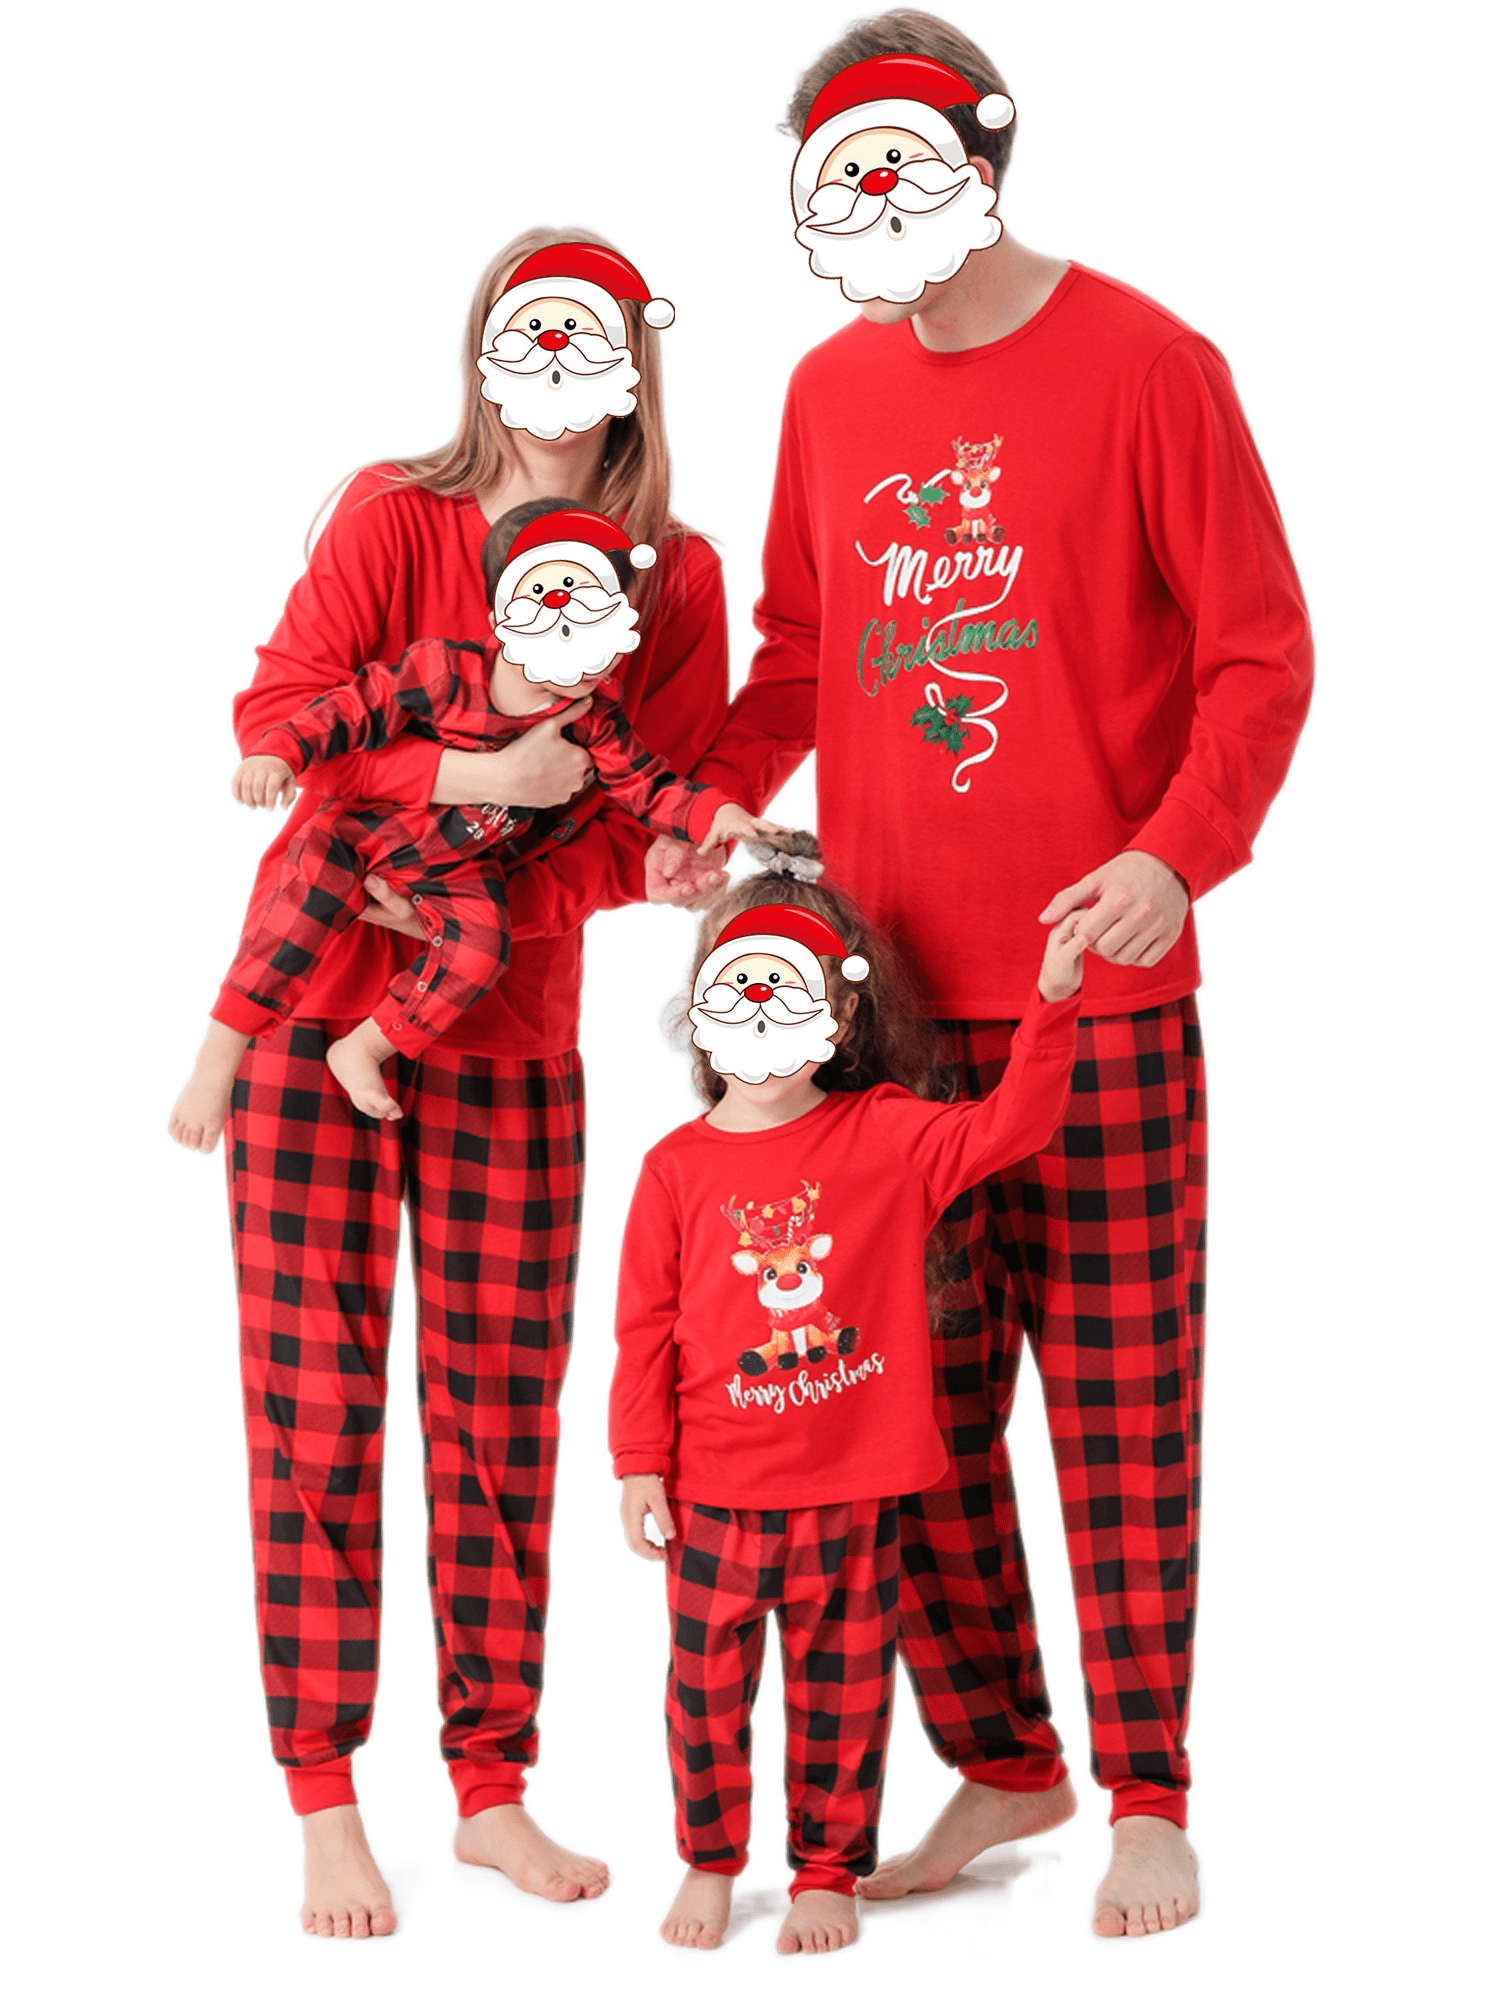 Sleepwear Matching Family Christmas Elf Pyjamas Parent Child Xmas Clothes Set